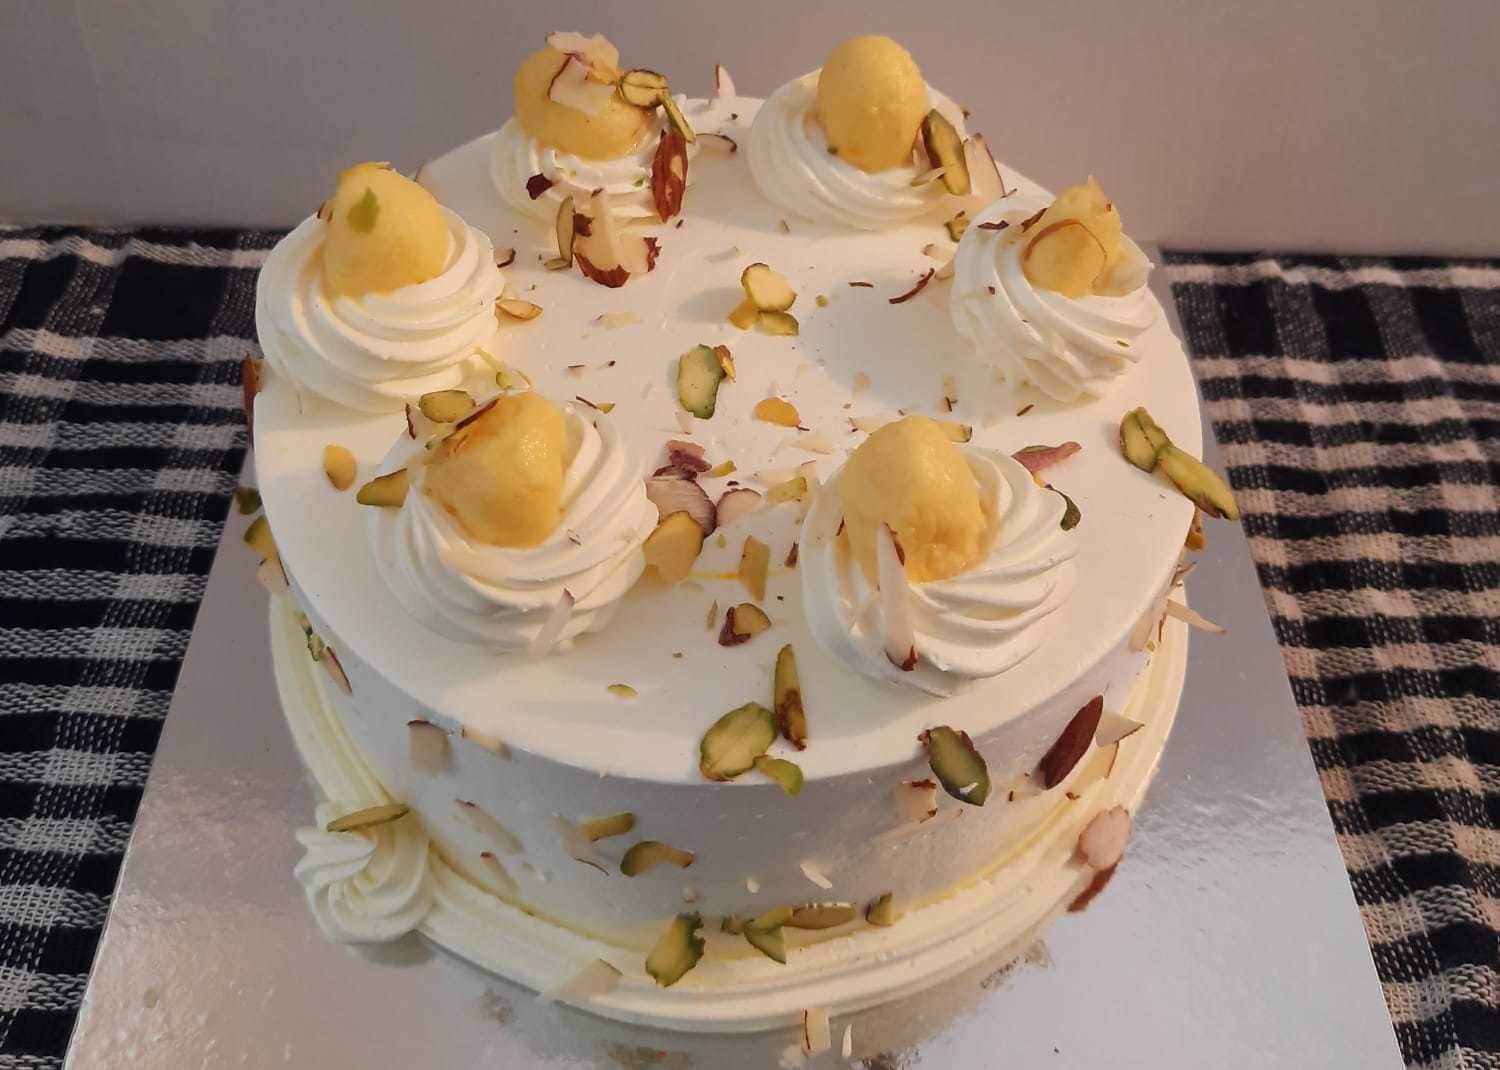 Share more than 61 cake bonzer bites latest  indaotaonec